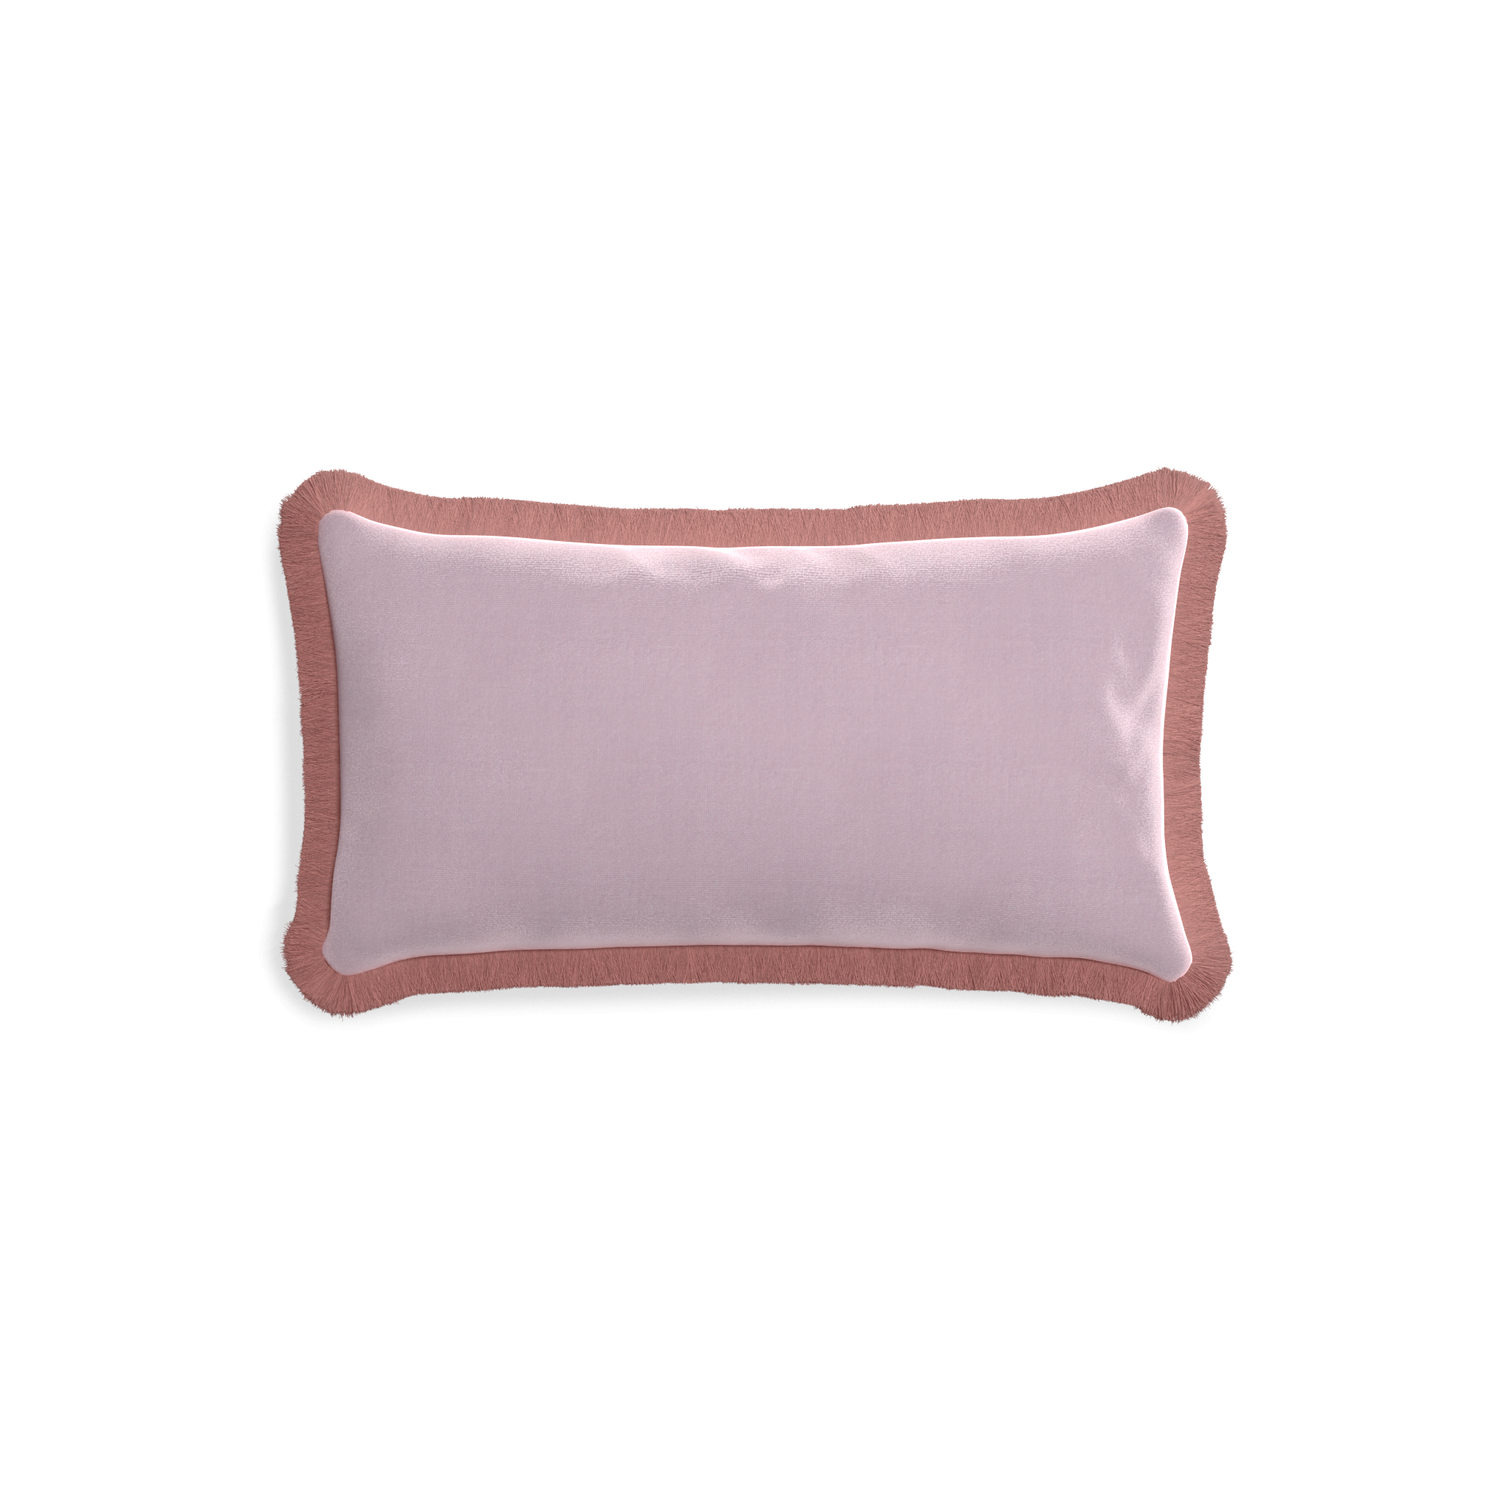 rectangle lilac velvet pillow with dusty rose fringe